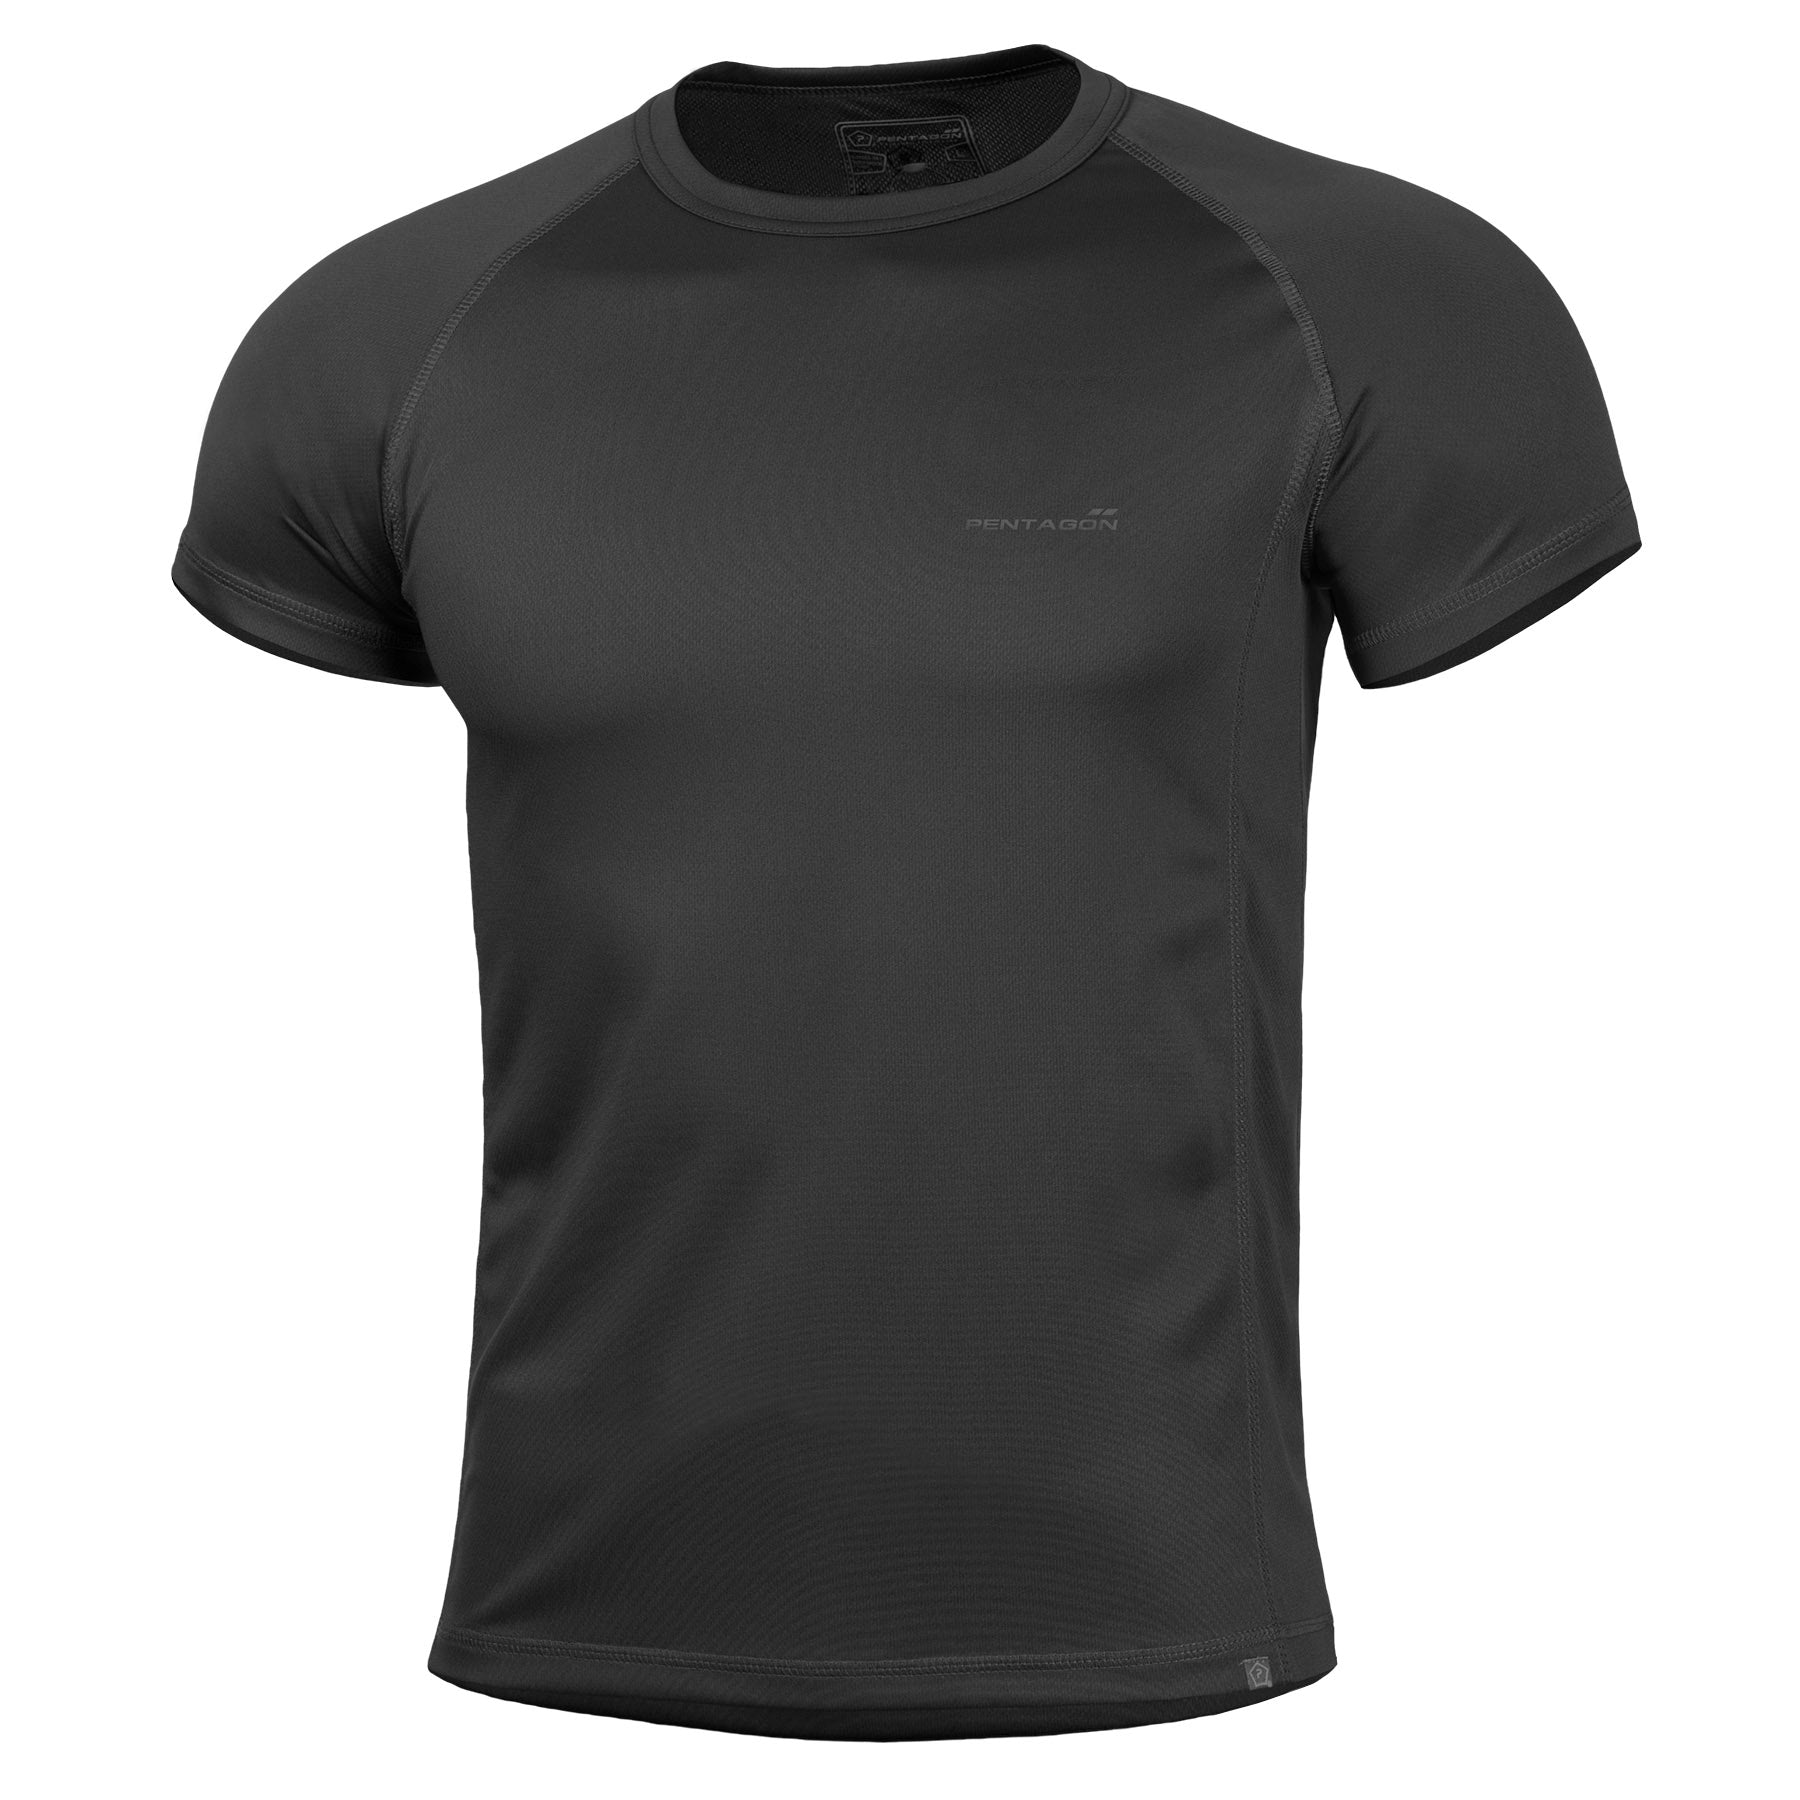 Pentagon - Body Shock Slim Fit Shirt (Black)